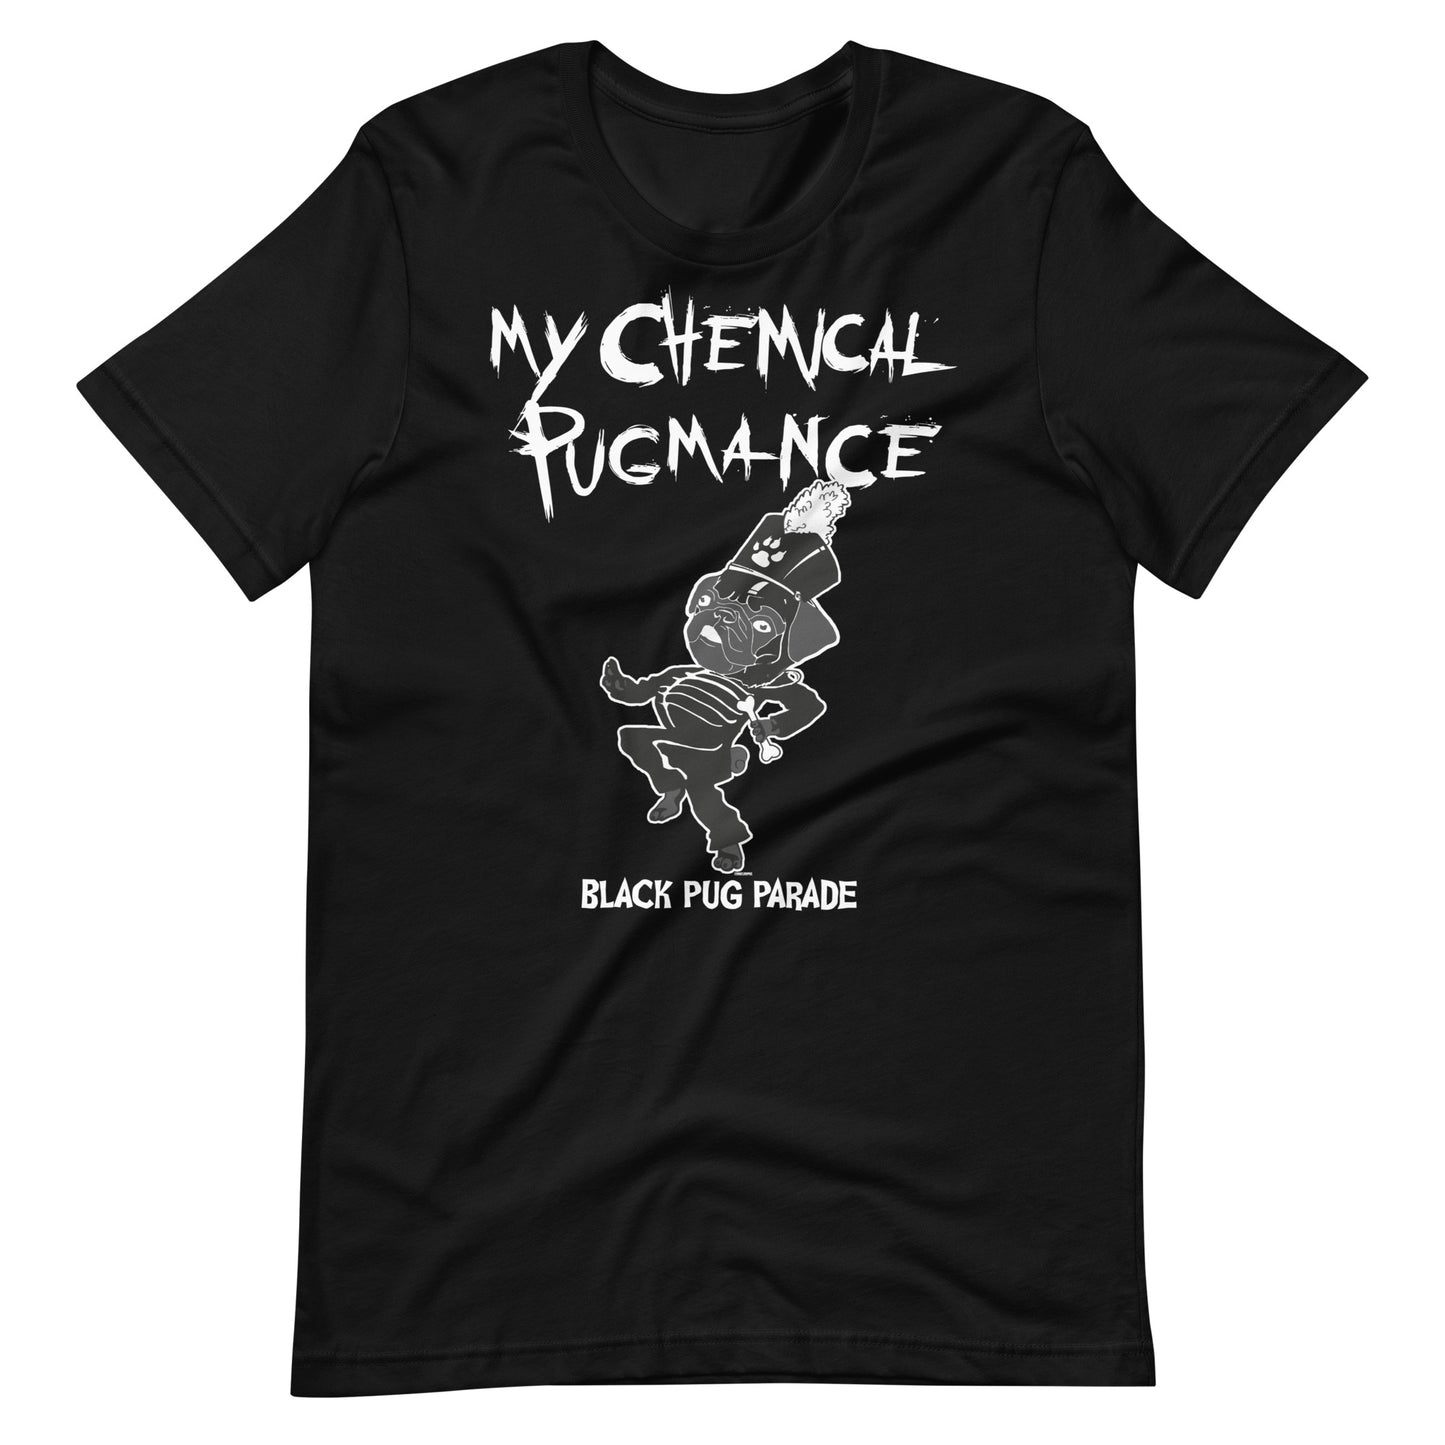 My Chemical Pugmance Unisex T-Shirt